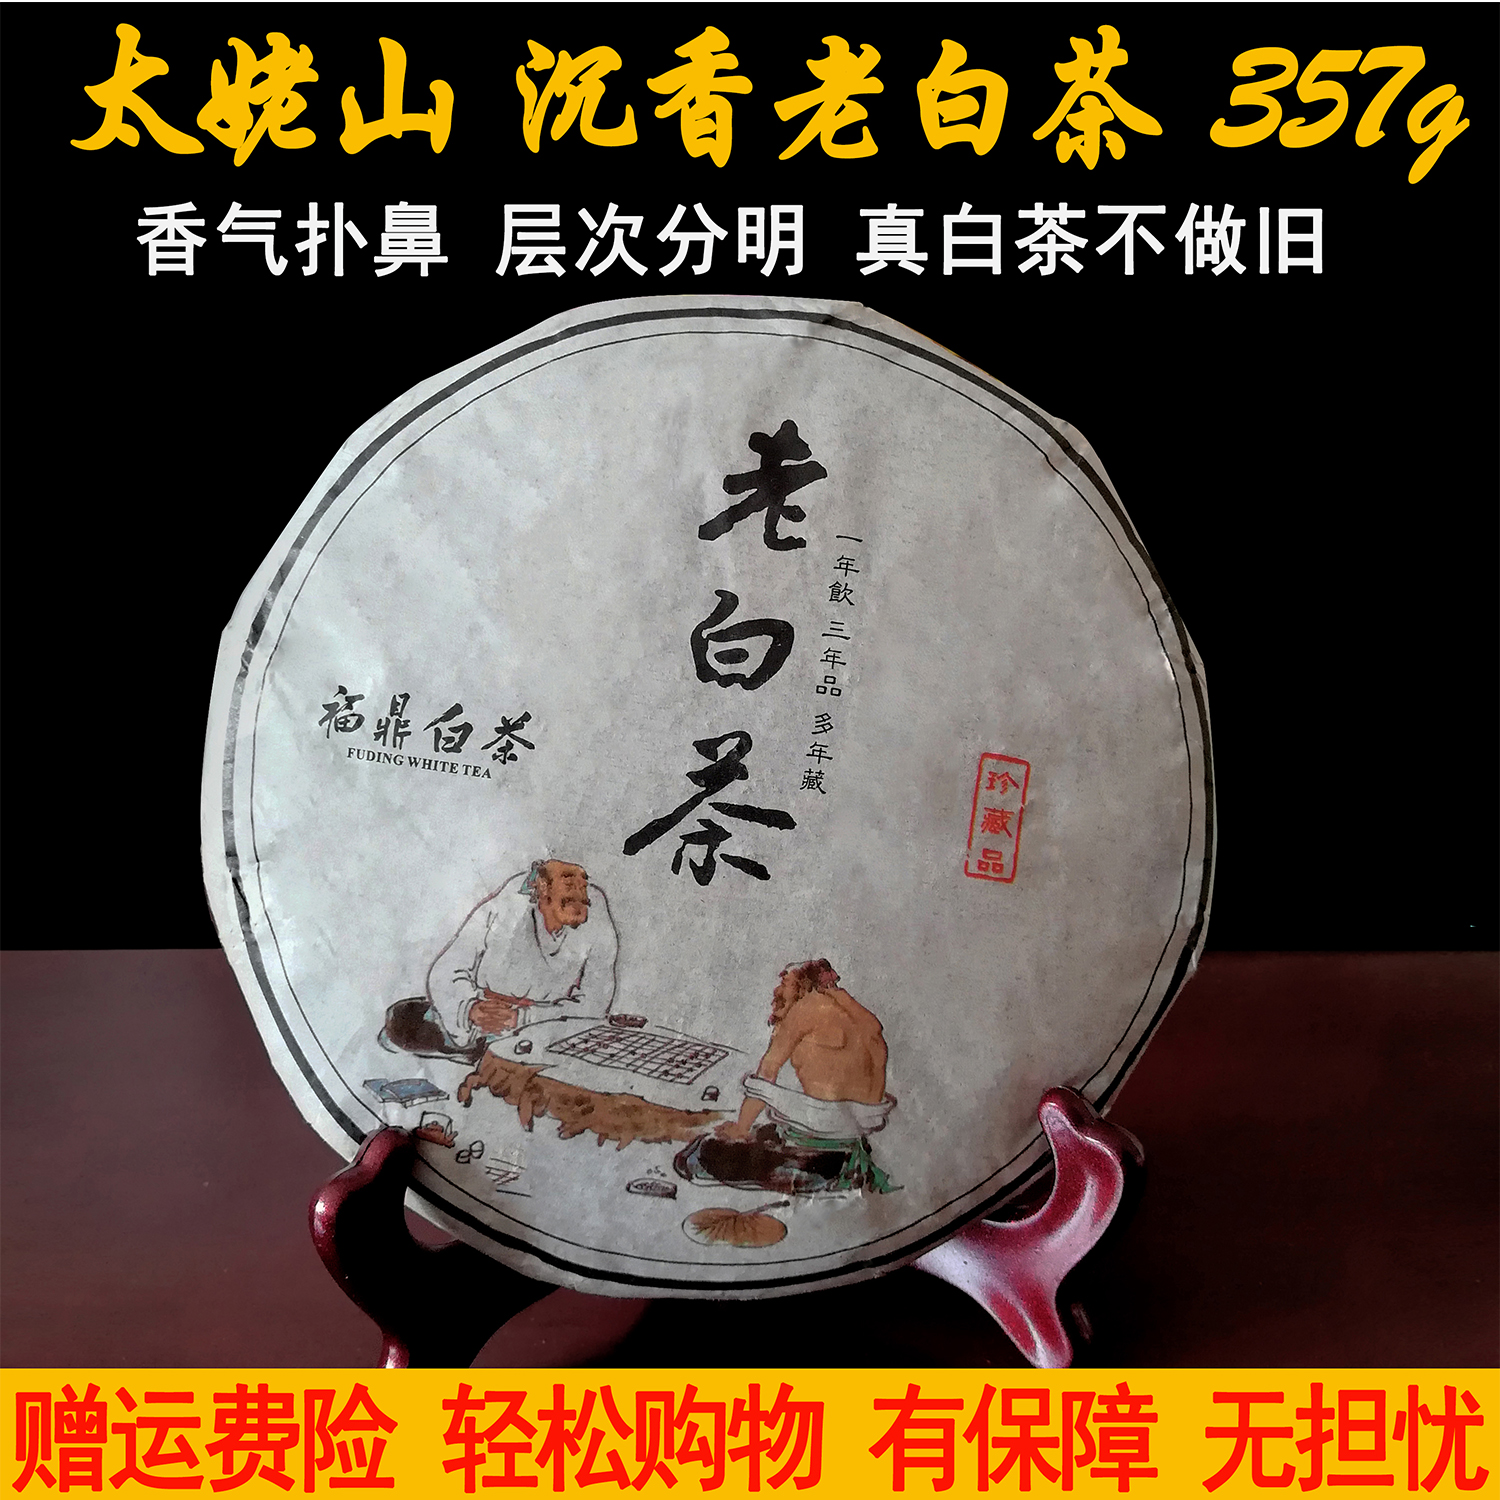 Fuding super old Alpine White Tea Cake old Shoumei authentic Fujian Gongmei tea gift box 357g